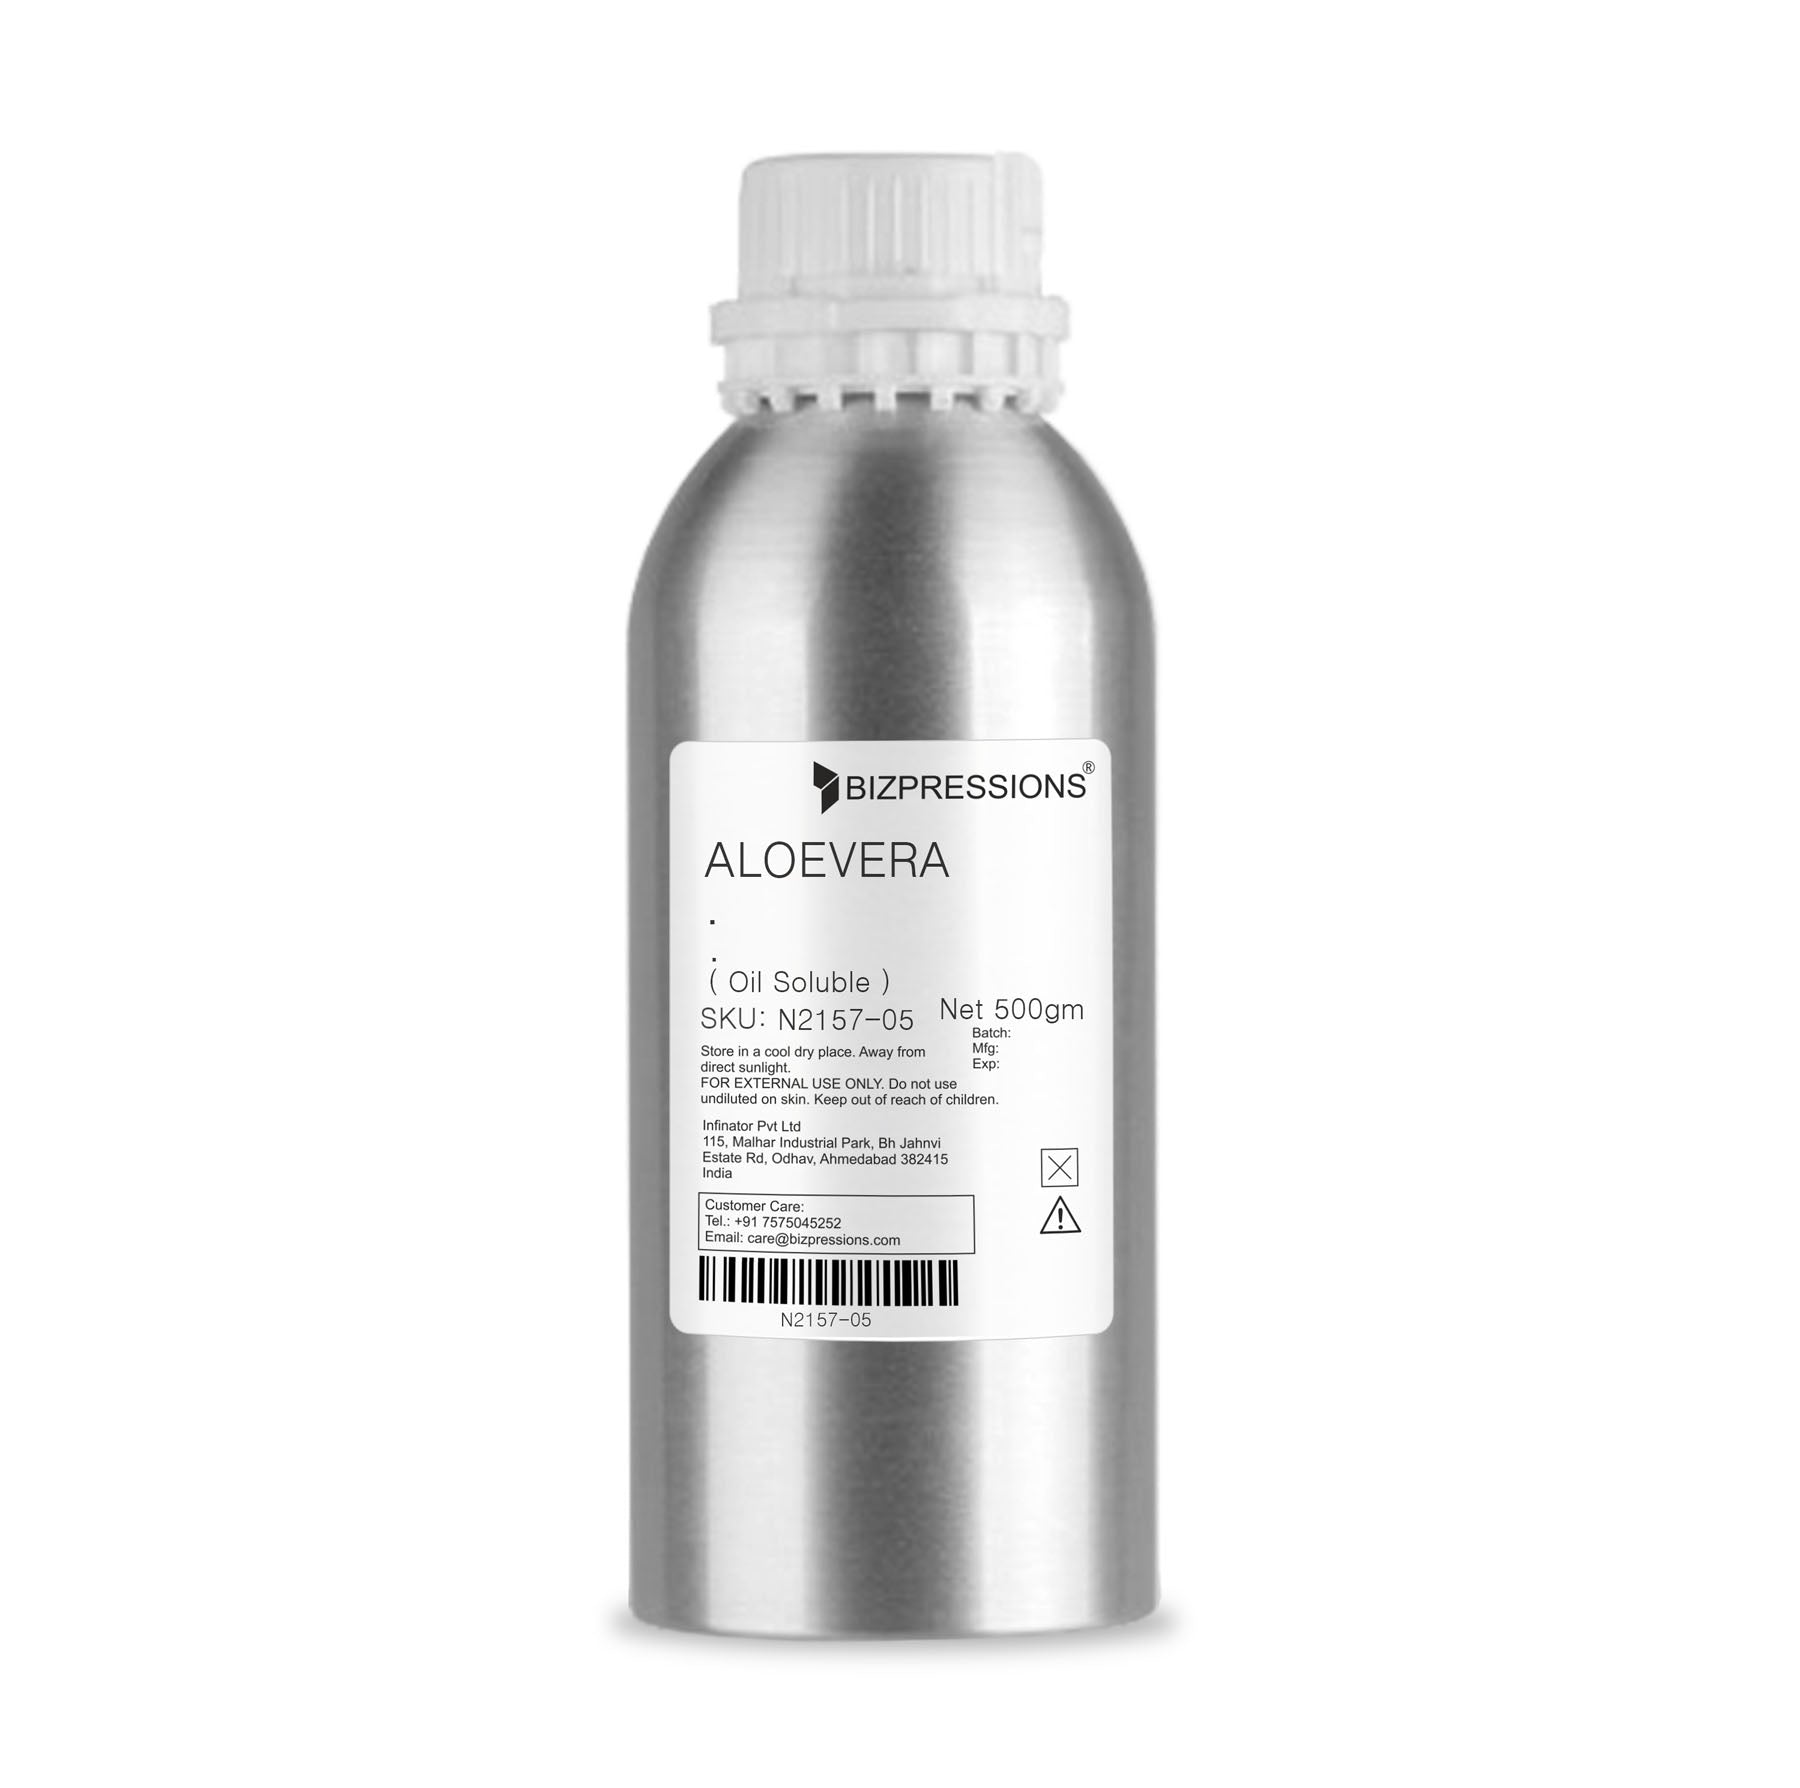 ALOEVERA - Fragrance ( Oil Soluble ) - 500 gm